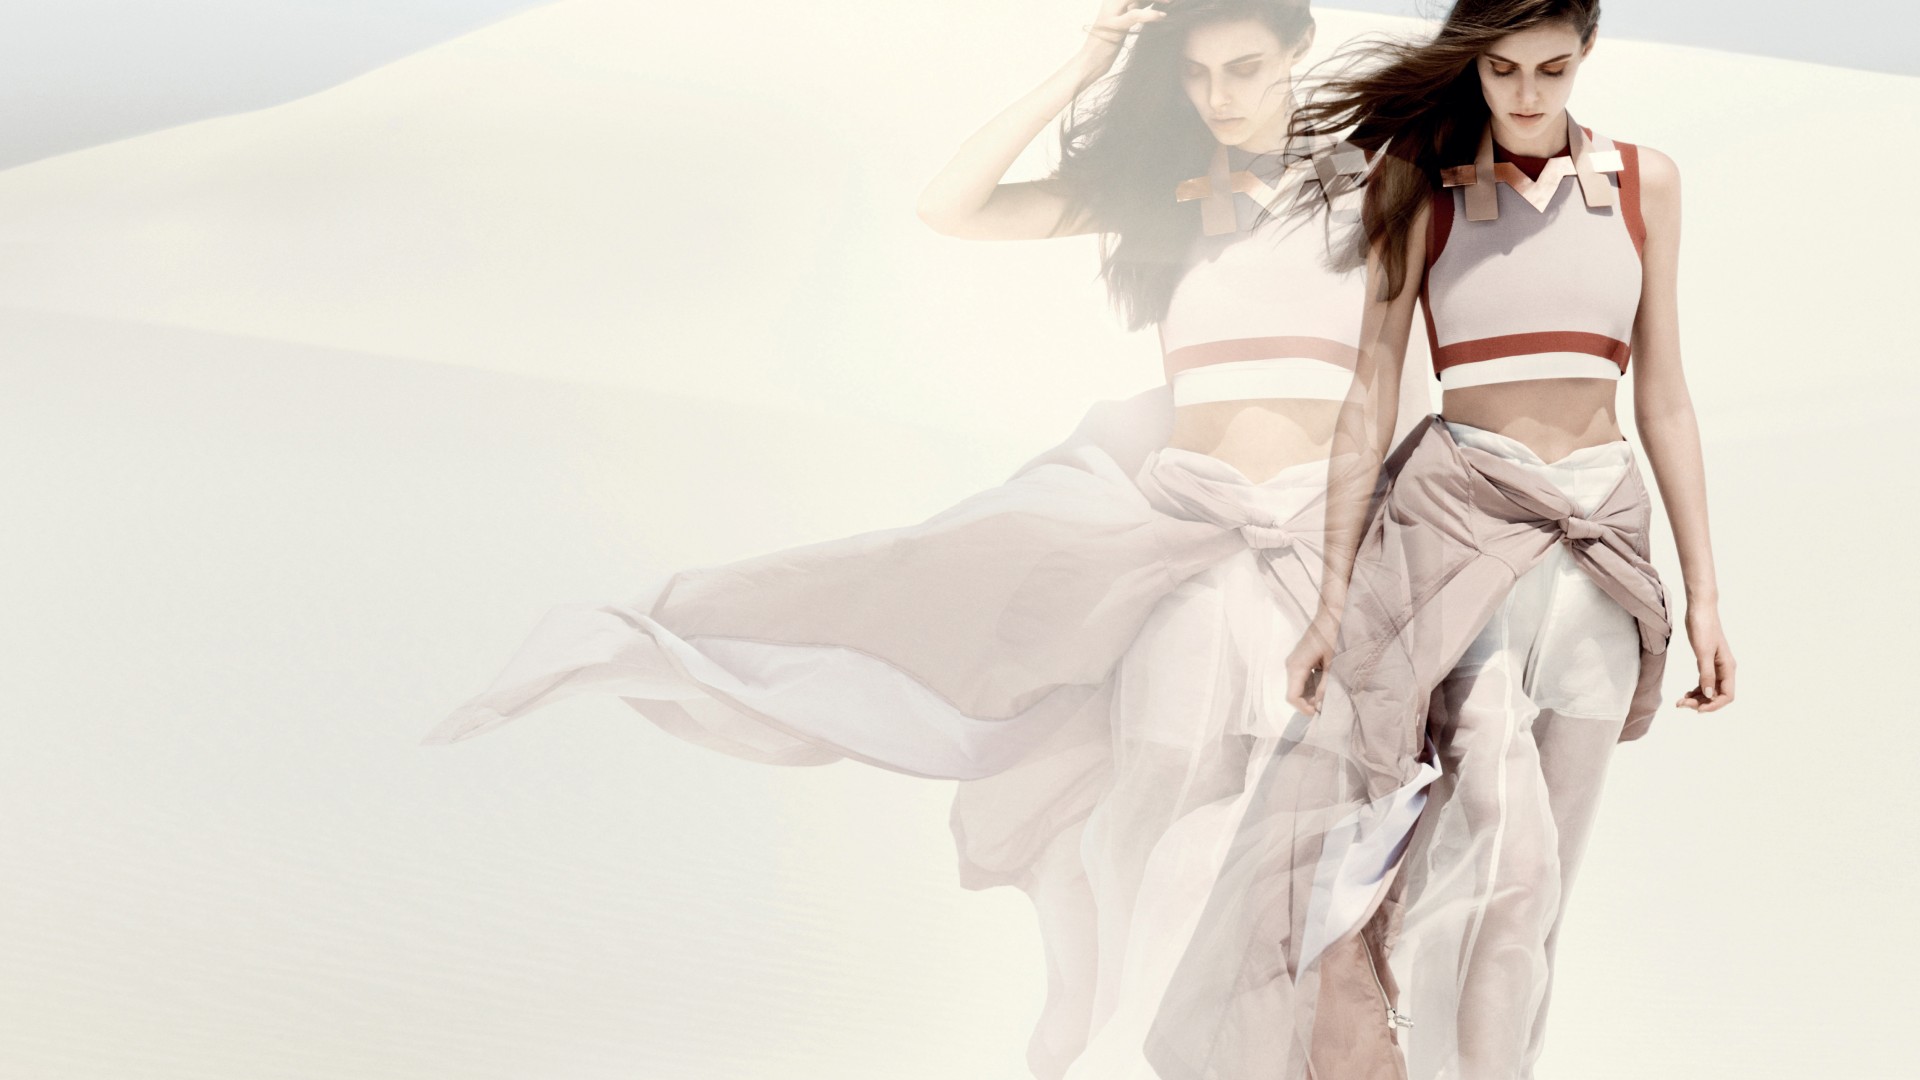 Auguste Abeliunaite, Top Fashion Models 2015, model, white dress, sand, wind (horizontal)